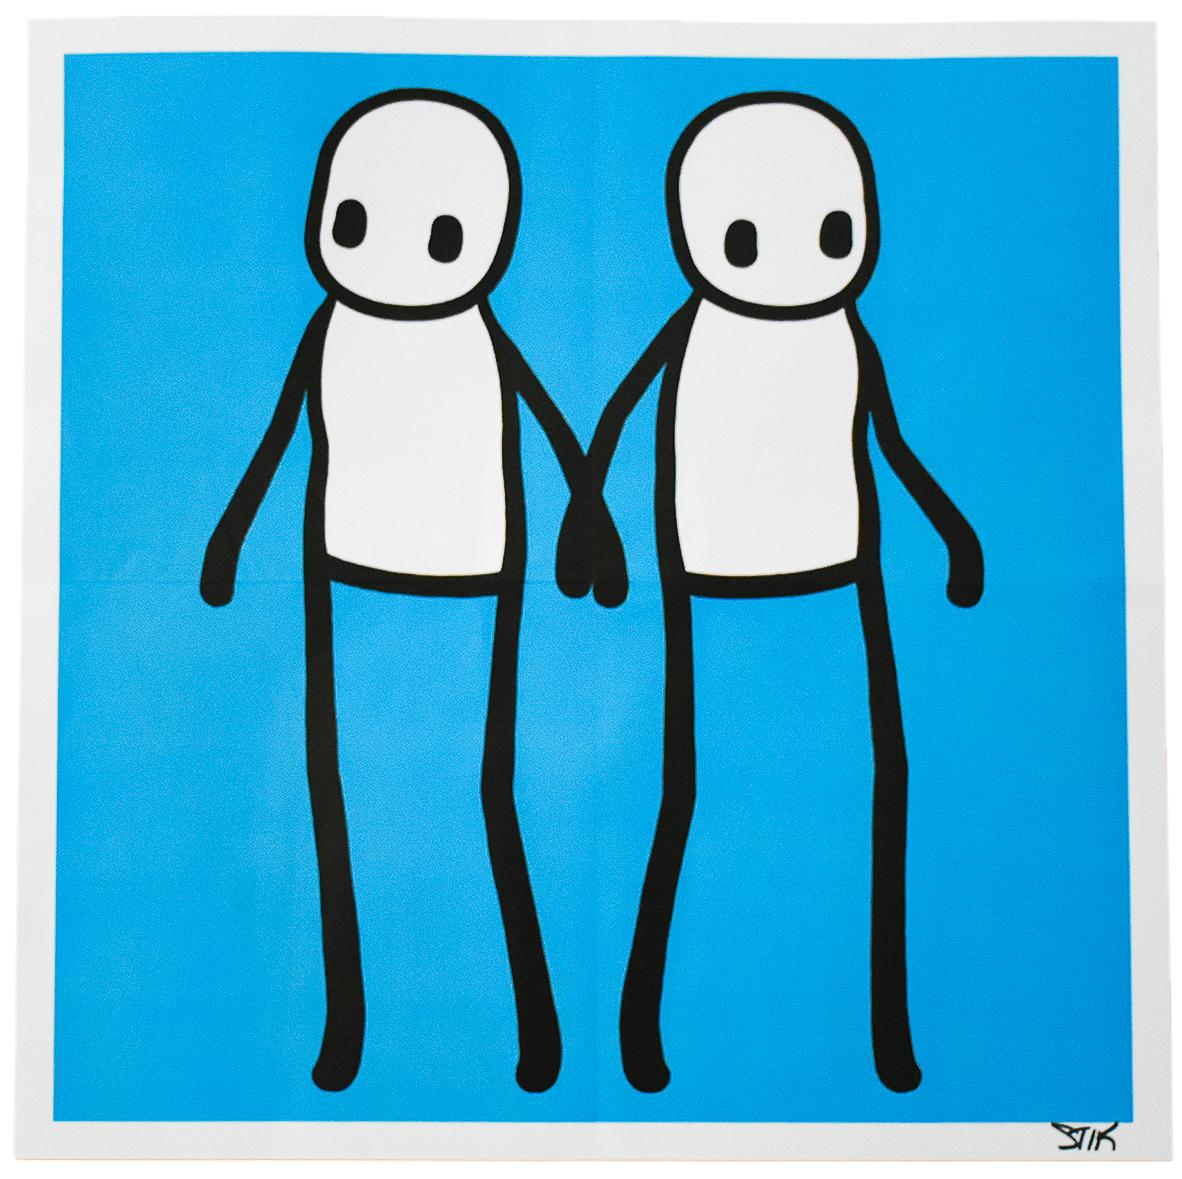 STIK Holding Hands (Signed Blue) - Print by Stik